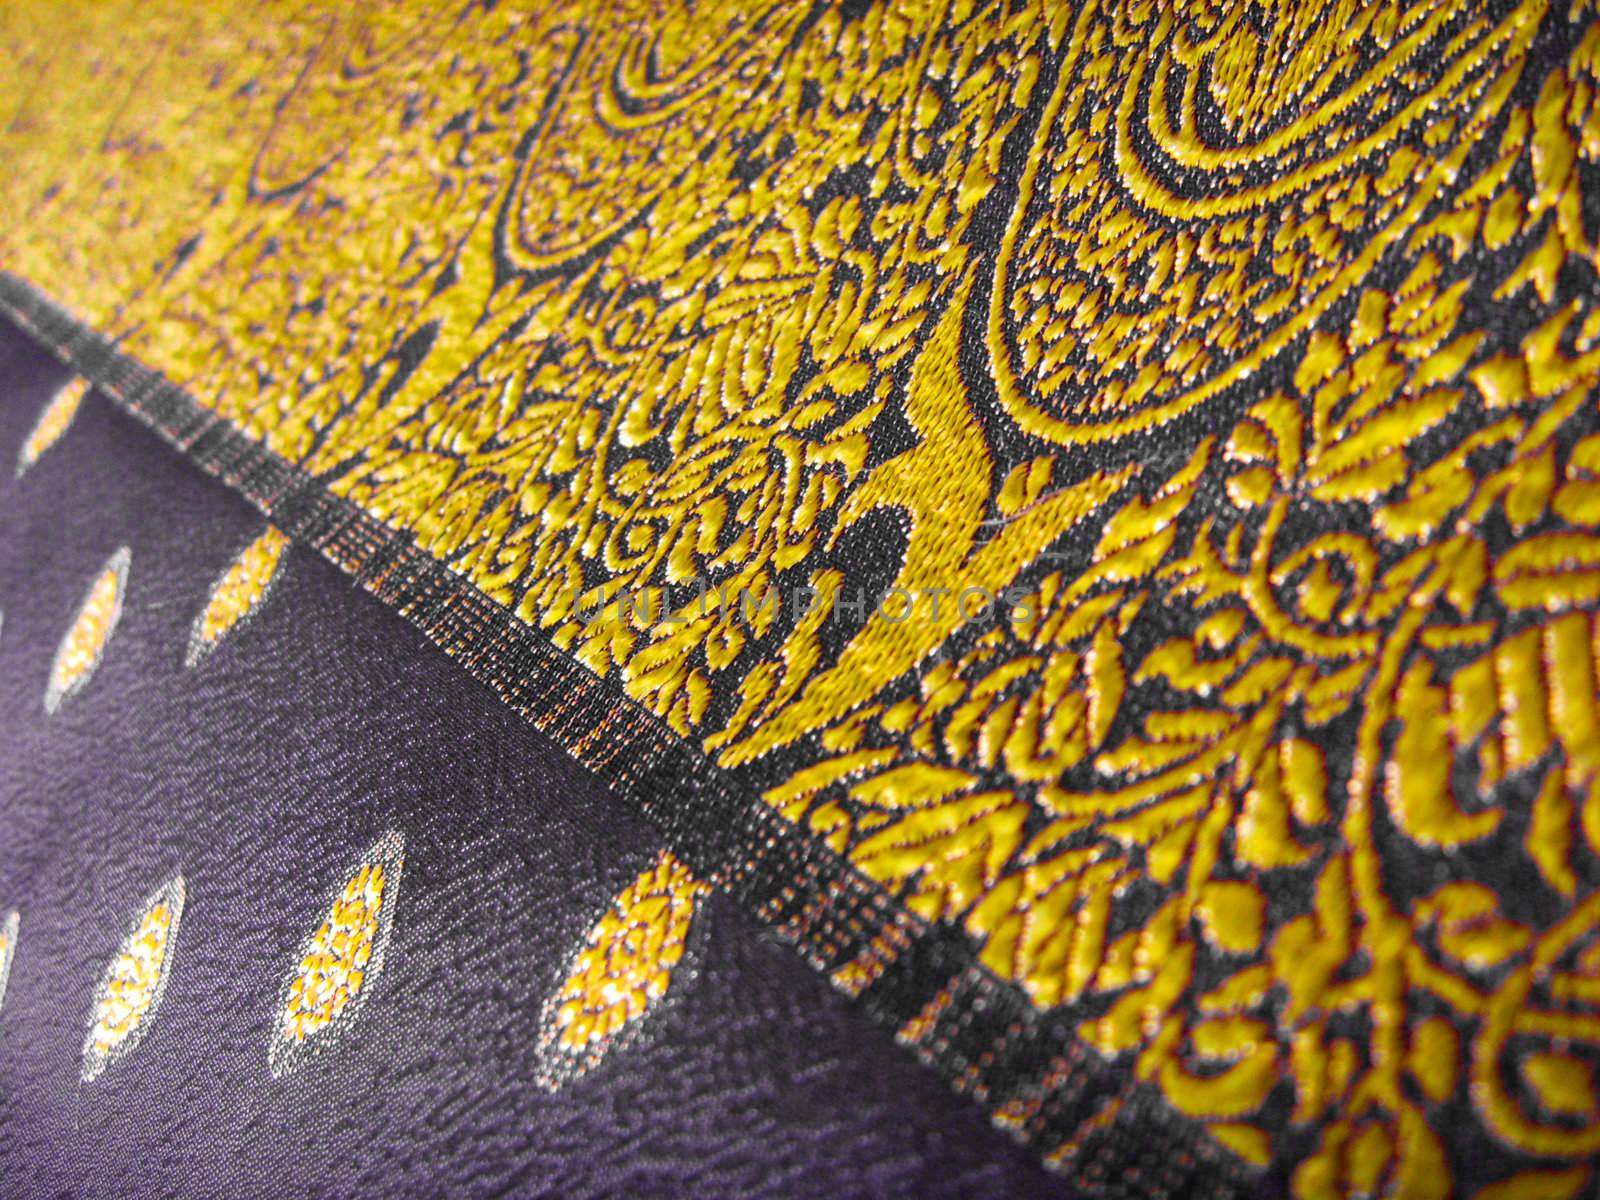 Beautiful floral design on a indian black and gold fabric known as a saree/sari